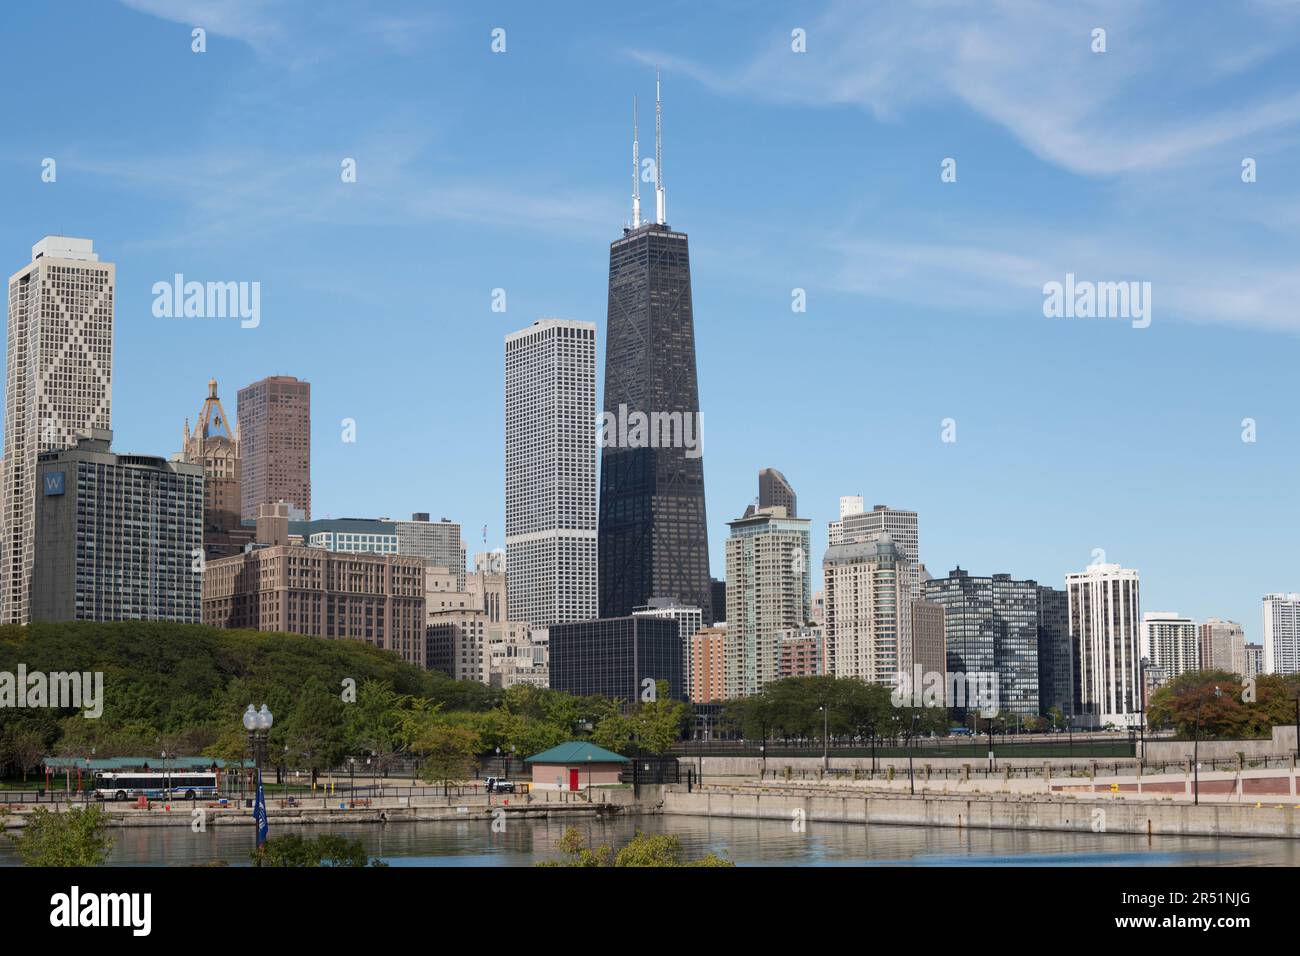 USA, Illinios, Chicago, city skyline with the Willis tower. Stock Photo